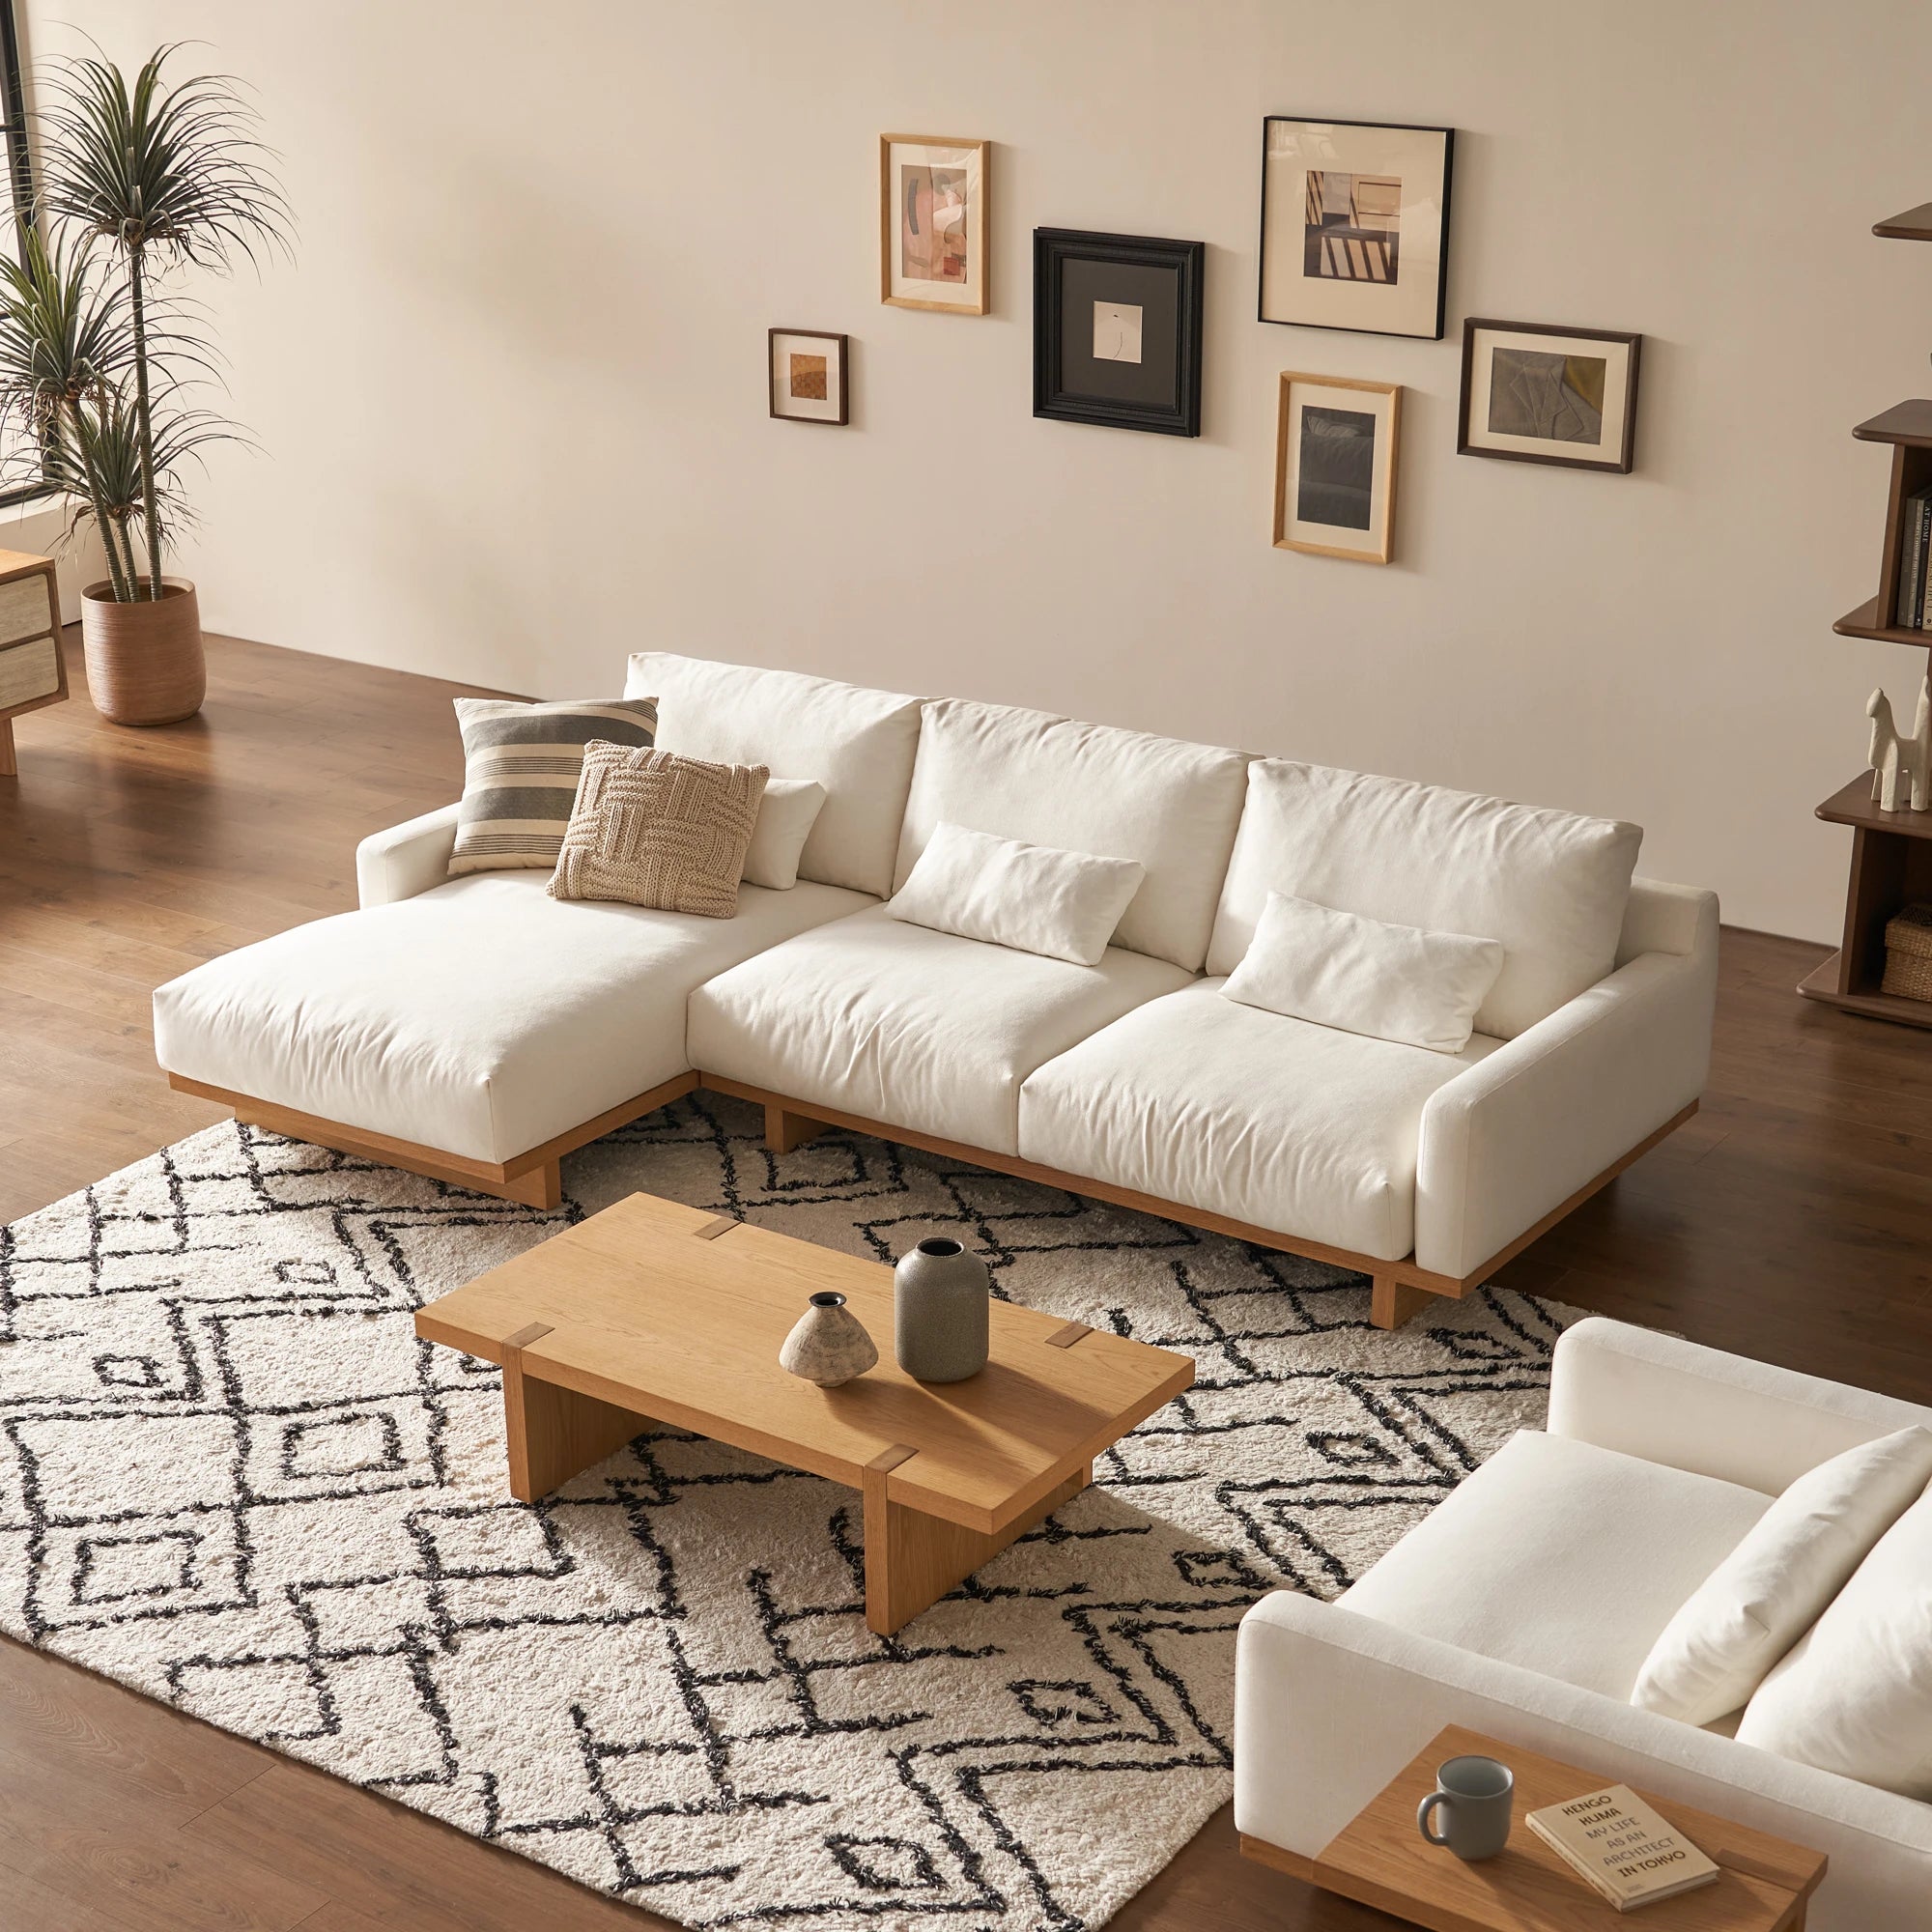 Japandi Fabric & Wood Chaise Sectional Sofa